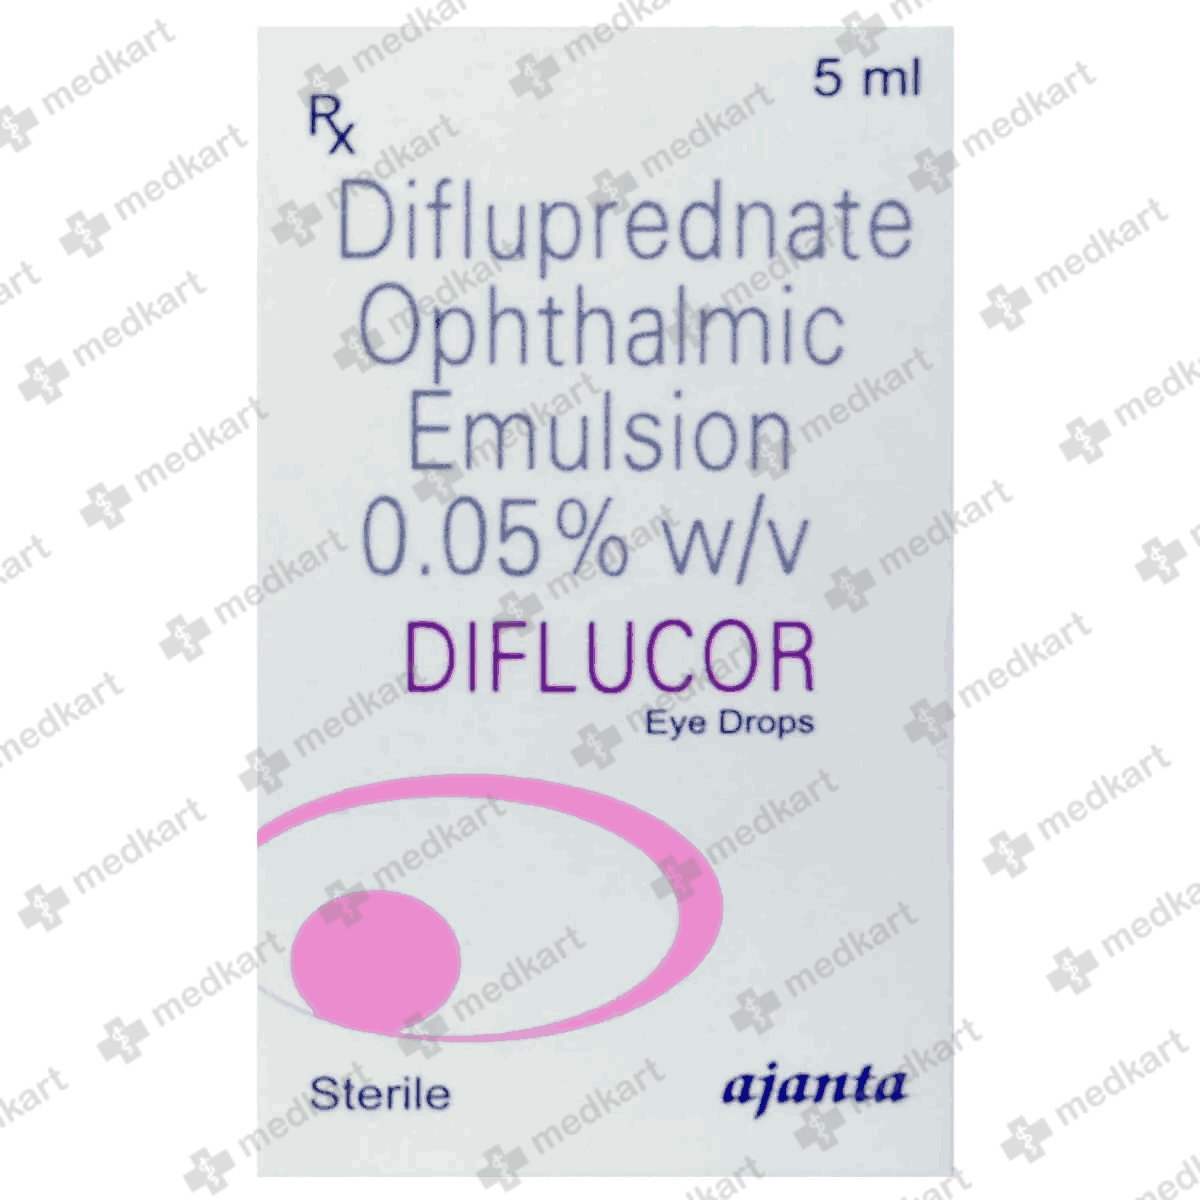 DIFLUCOR DROPS 5 ML